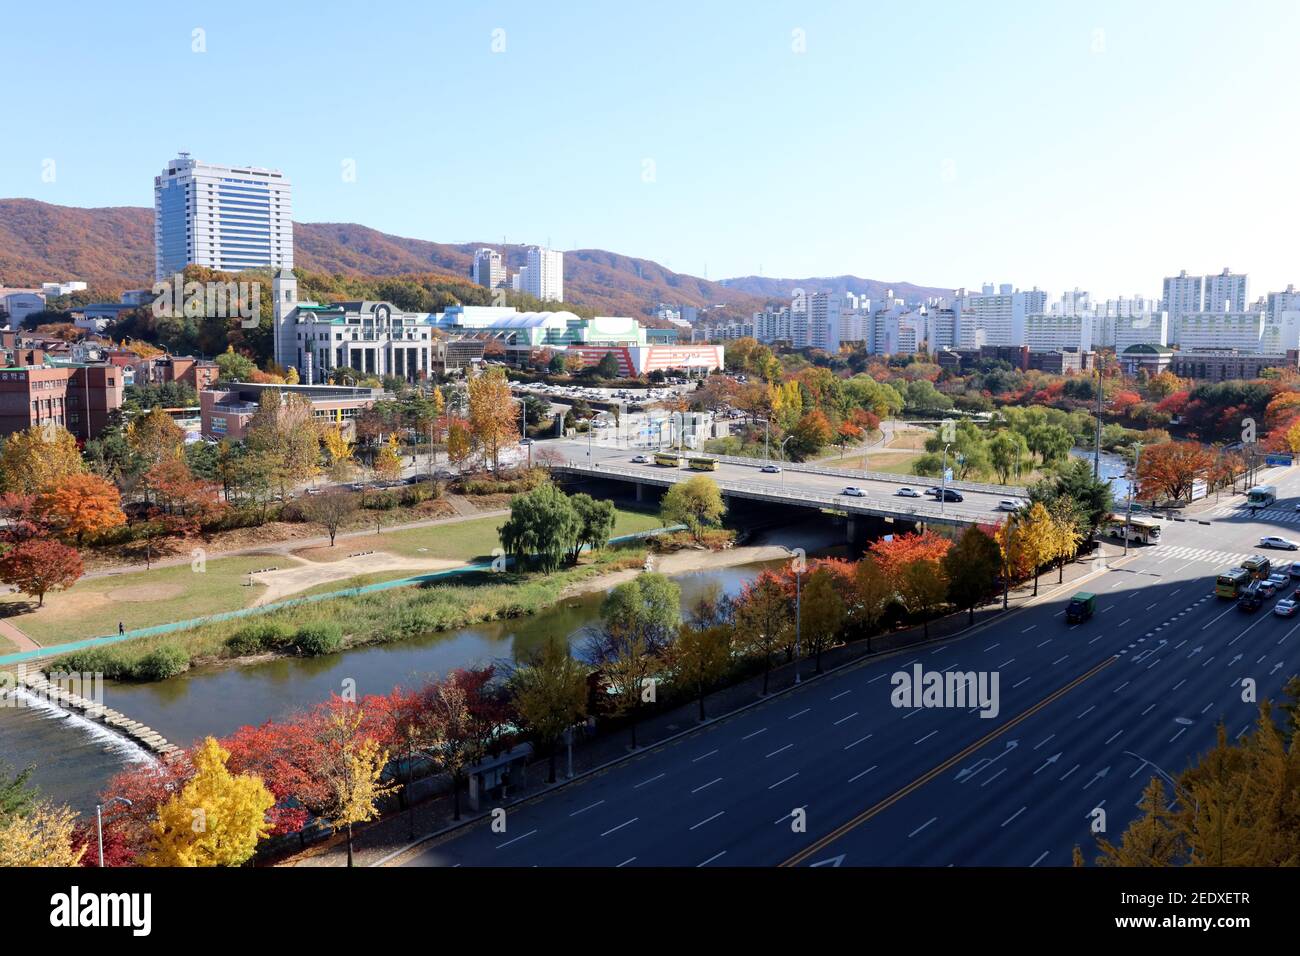 Bundang in Gyeonggi Province, Korea Stock Photo